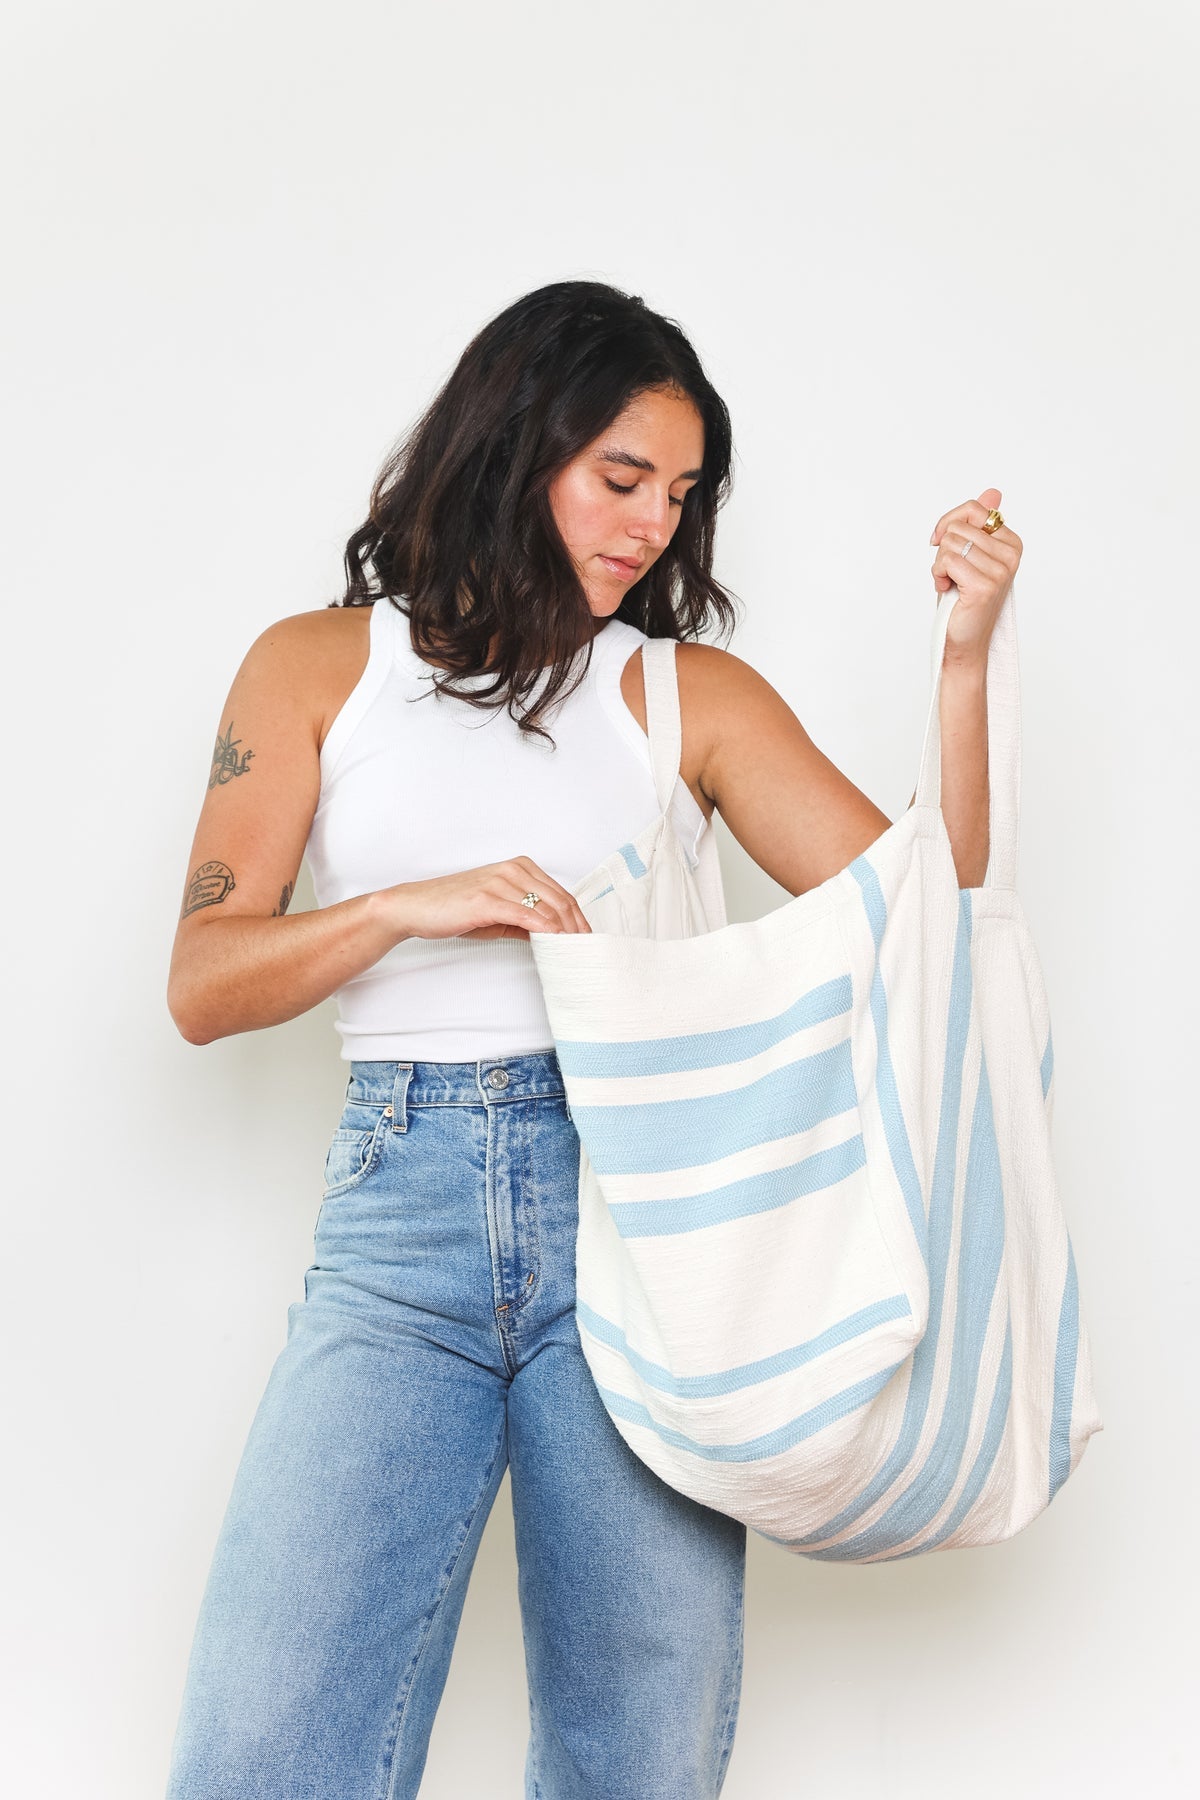 Tofino Towel Rey Tote Bag | Blue